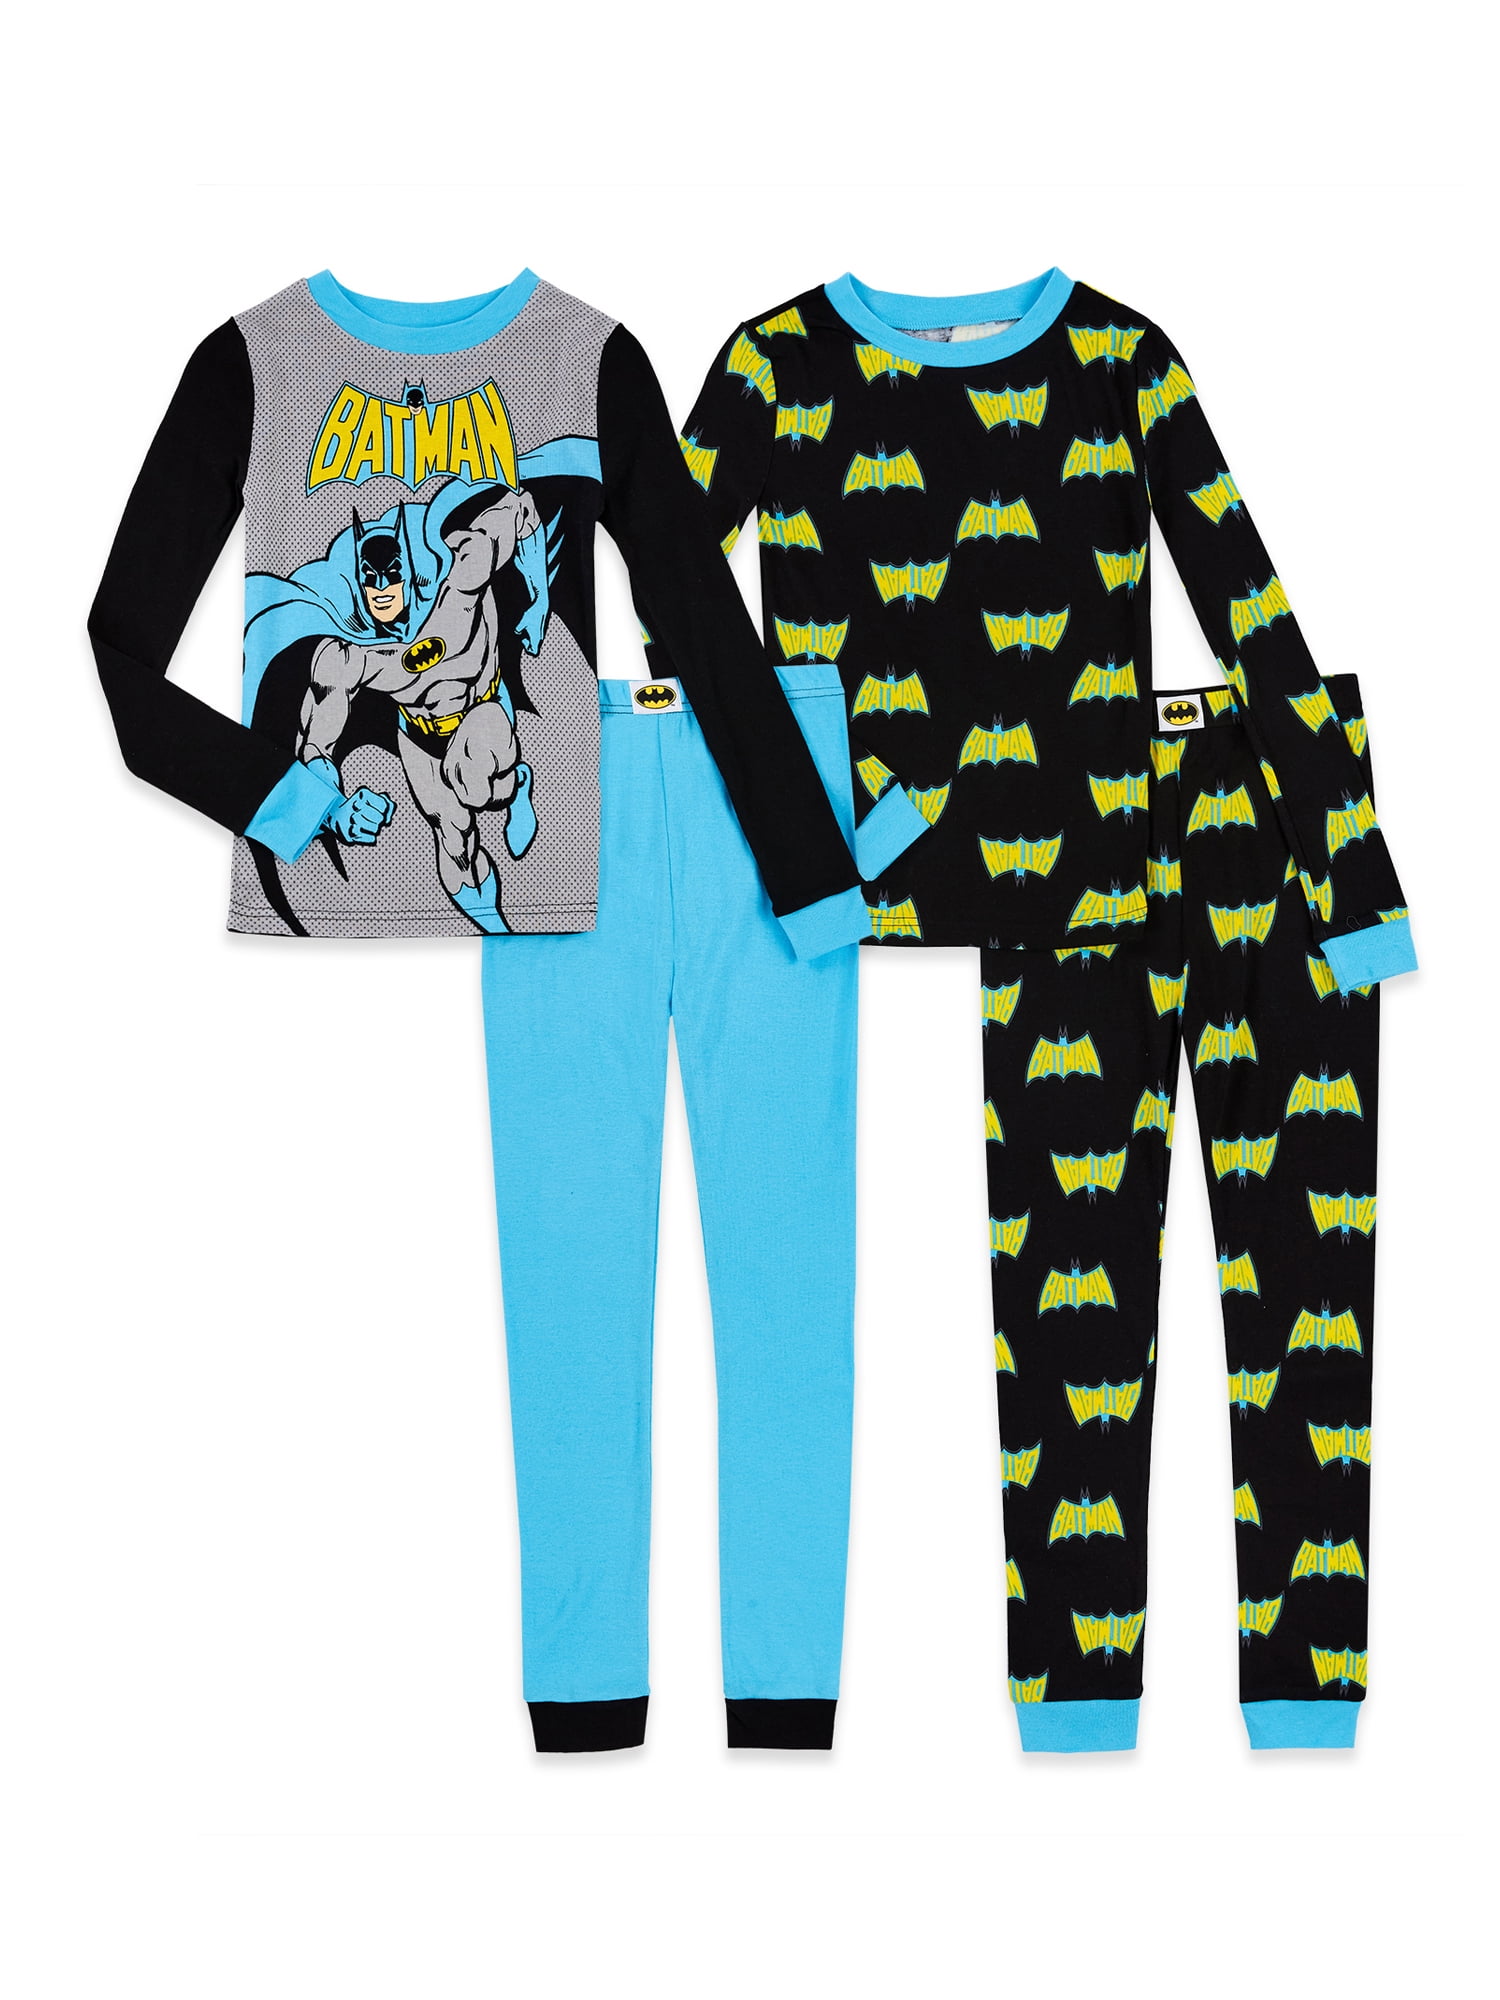 Essentials Boys Snug-Fit Cotton Pajamas Sleepwear Sets